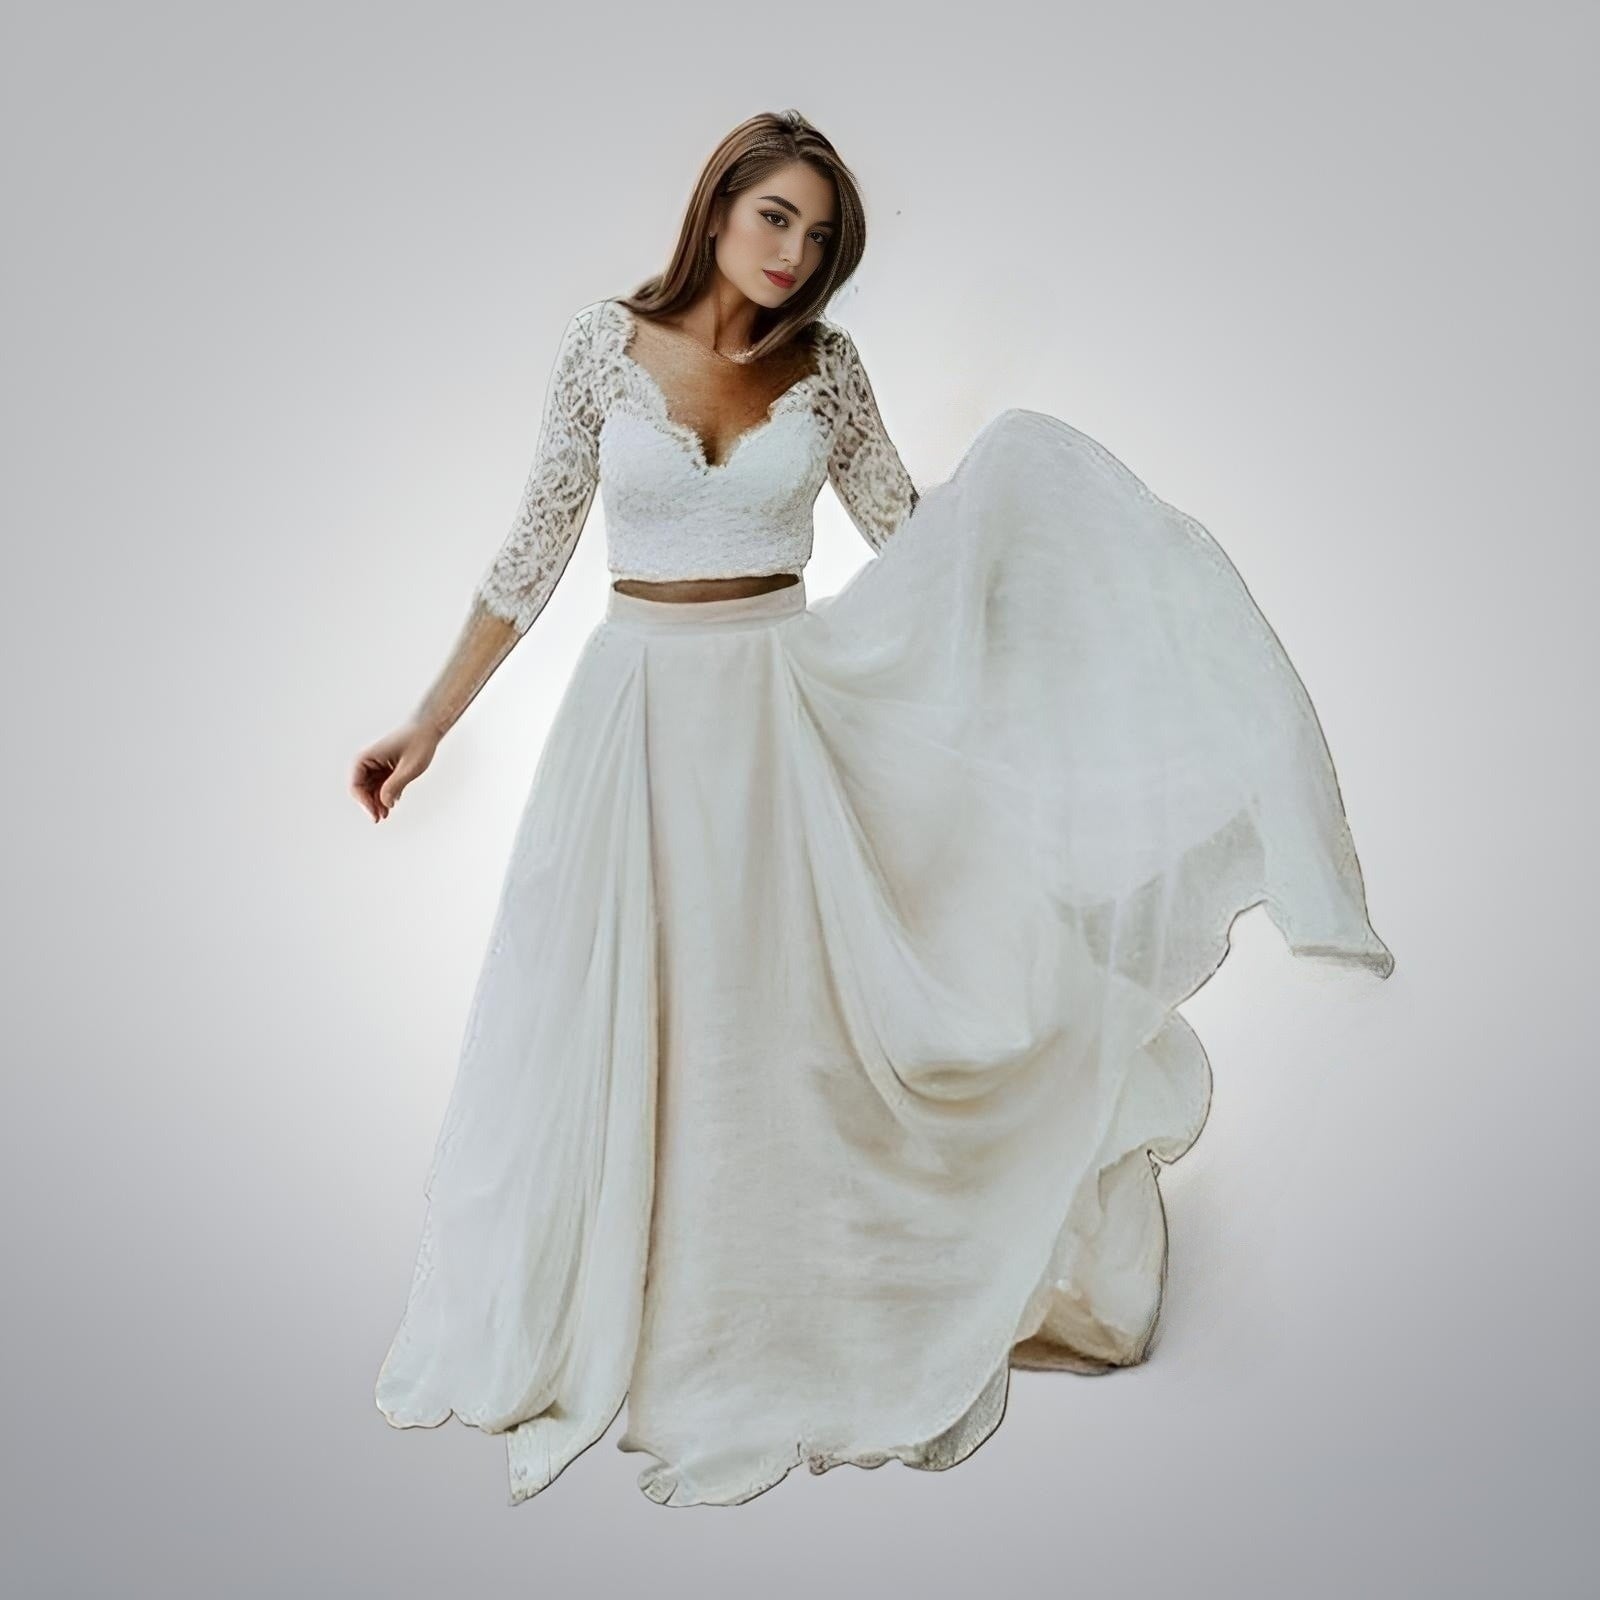 Bride in Boho 2 Piece Wedding Dress embracing her Bohemian Spirit